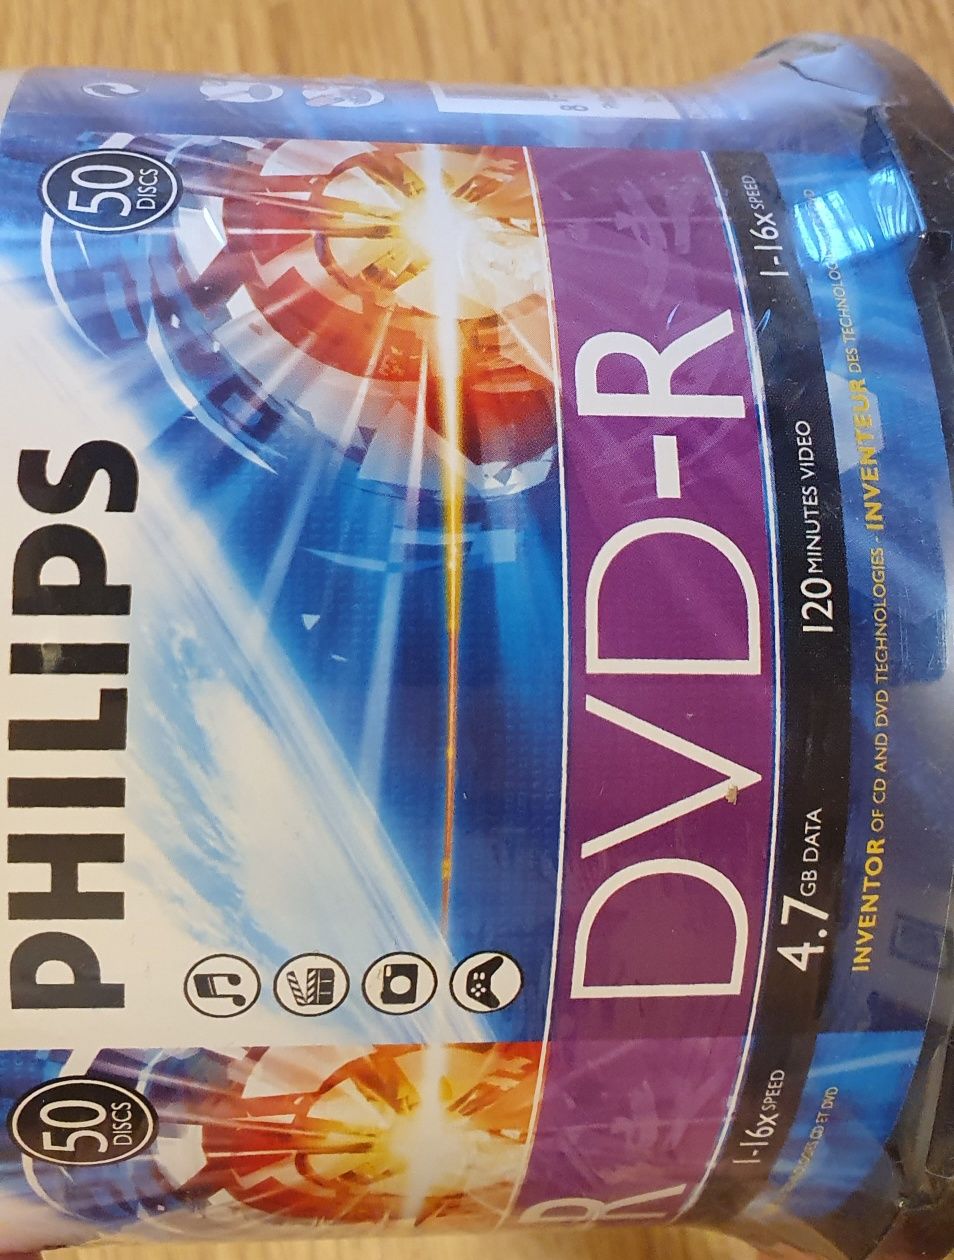 Philips dvd-r. 4,7 gb data